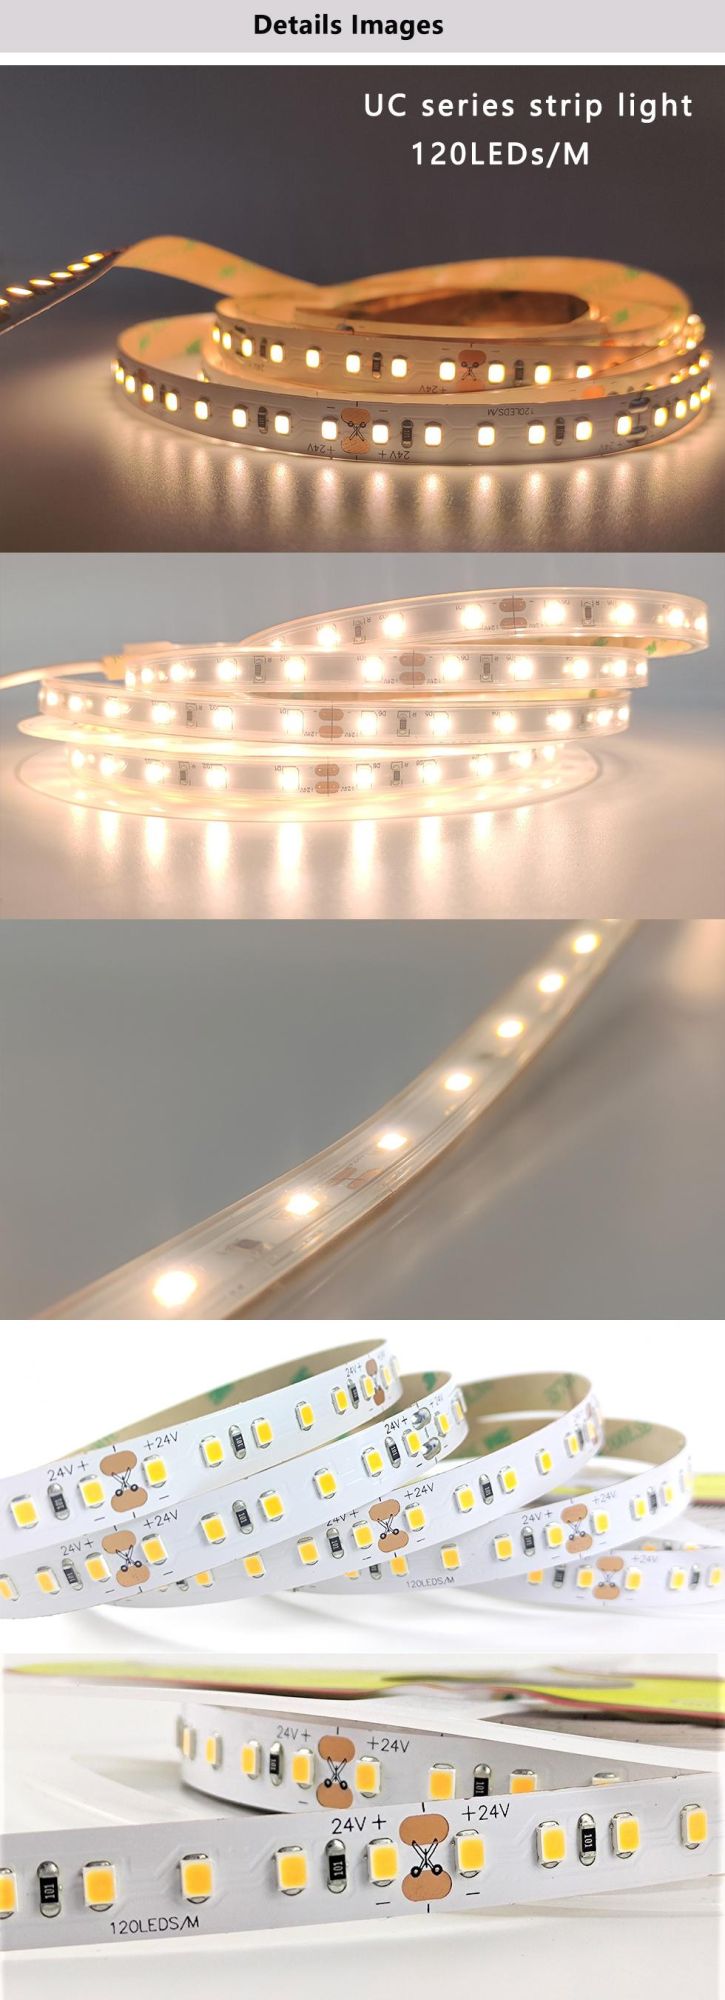 LED Strip Light for Bedroom